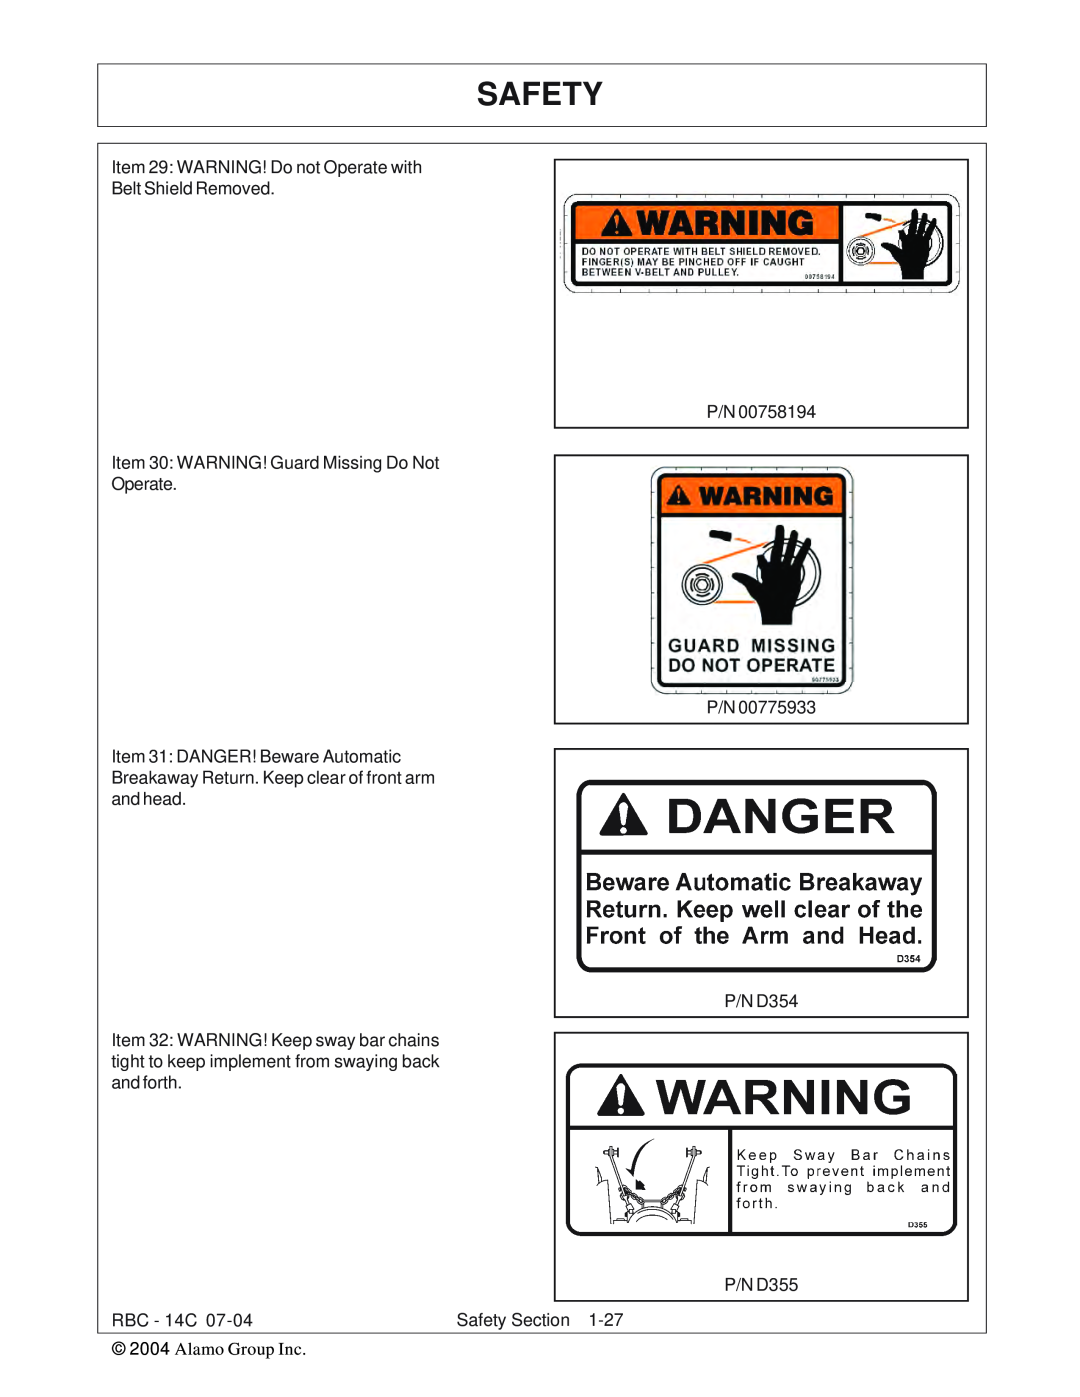 Tiger RBF-14C manual Safety, Item 30: WARNING! Guard Missing Do Not Operate, P/N P/N P/N D354, P/N D355, RBC - 14C 